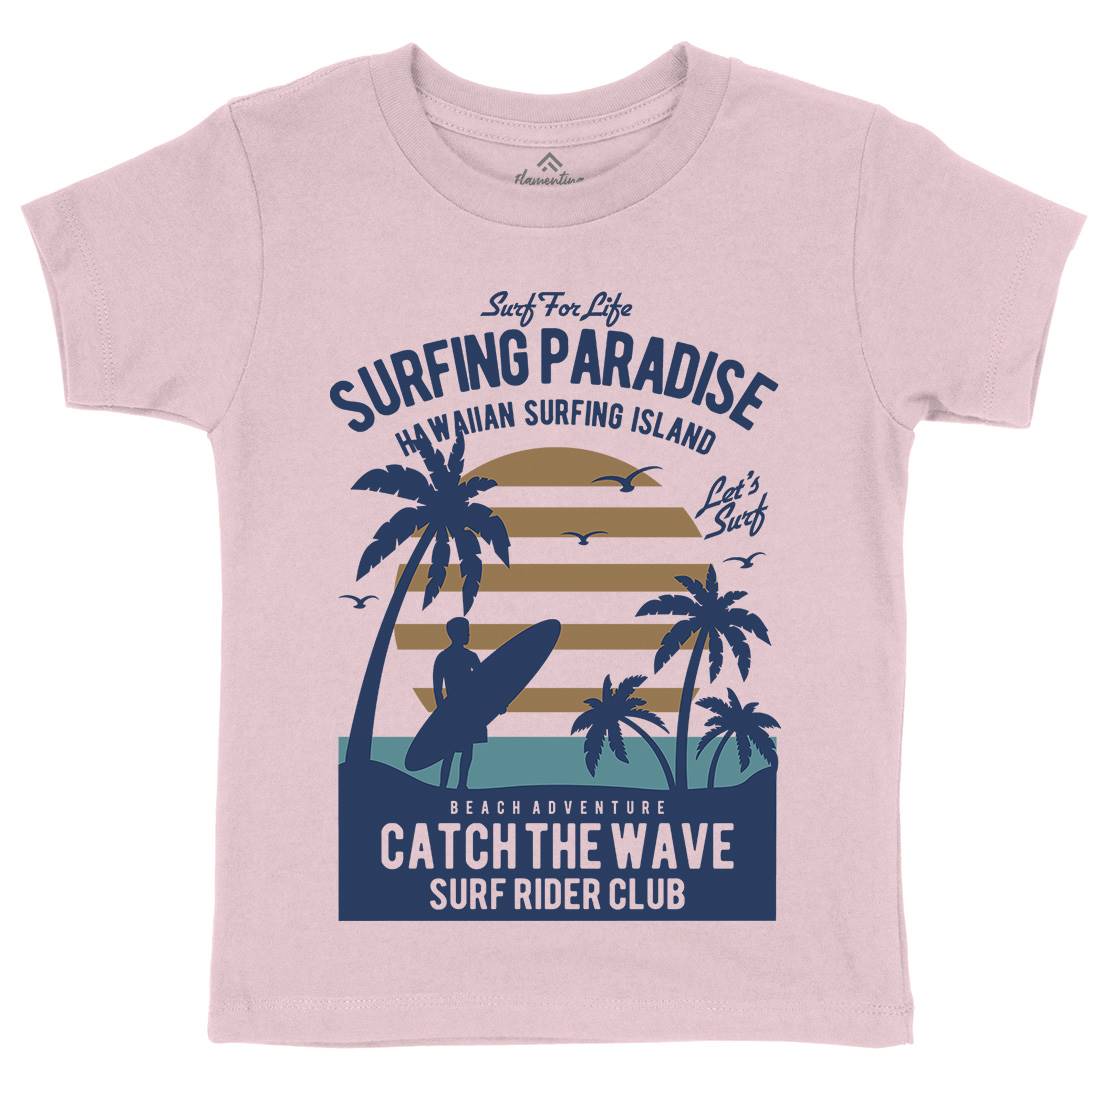 Surfing Paradise Kids Crew Neck T-Shirt Surf B463